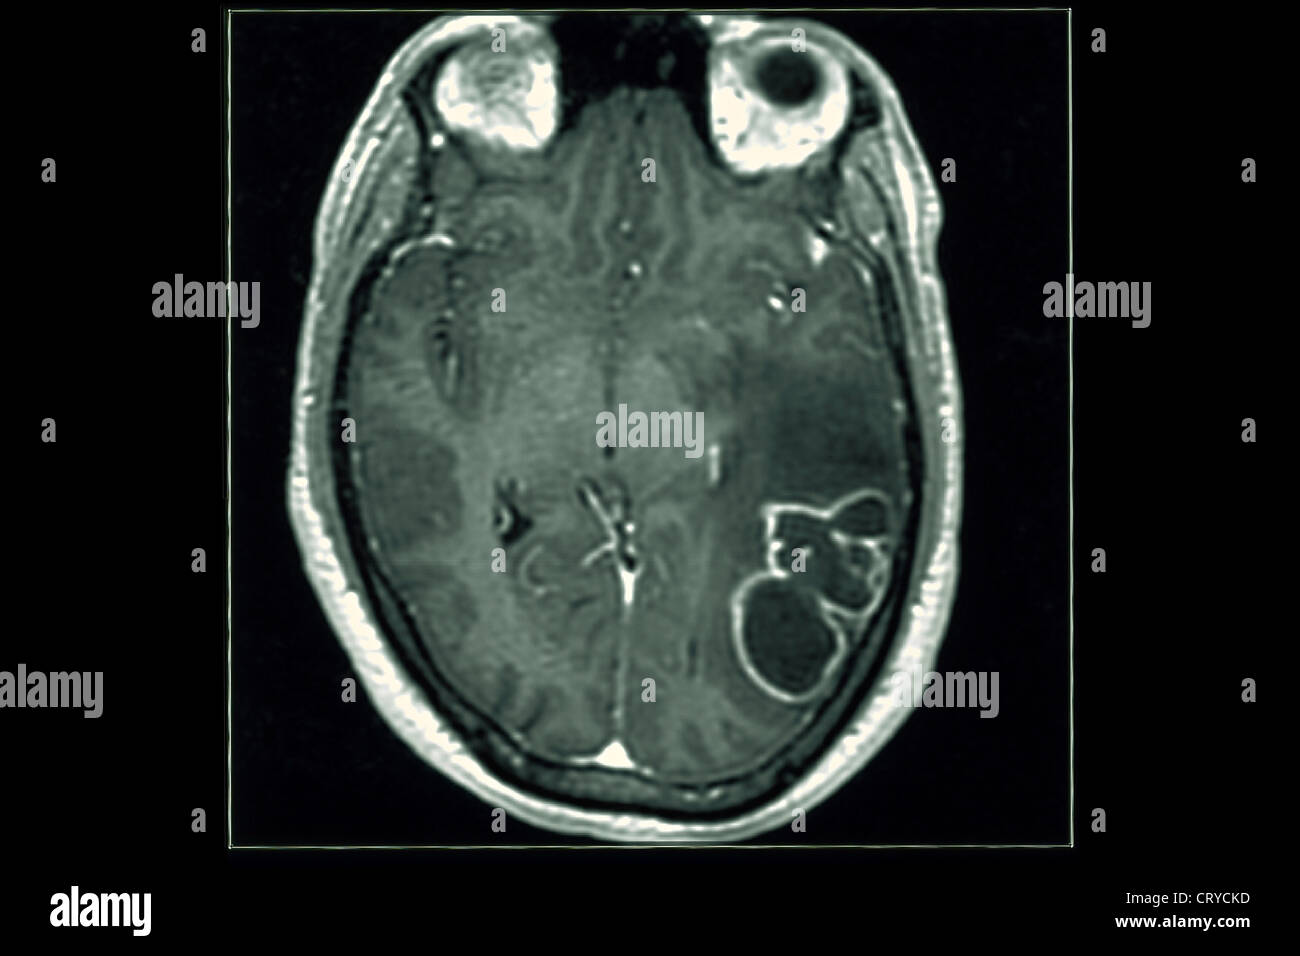 Abscesos cerebrales fotografías e imágenes de alta resolución - Alamy